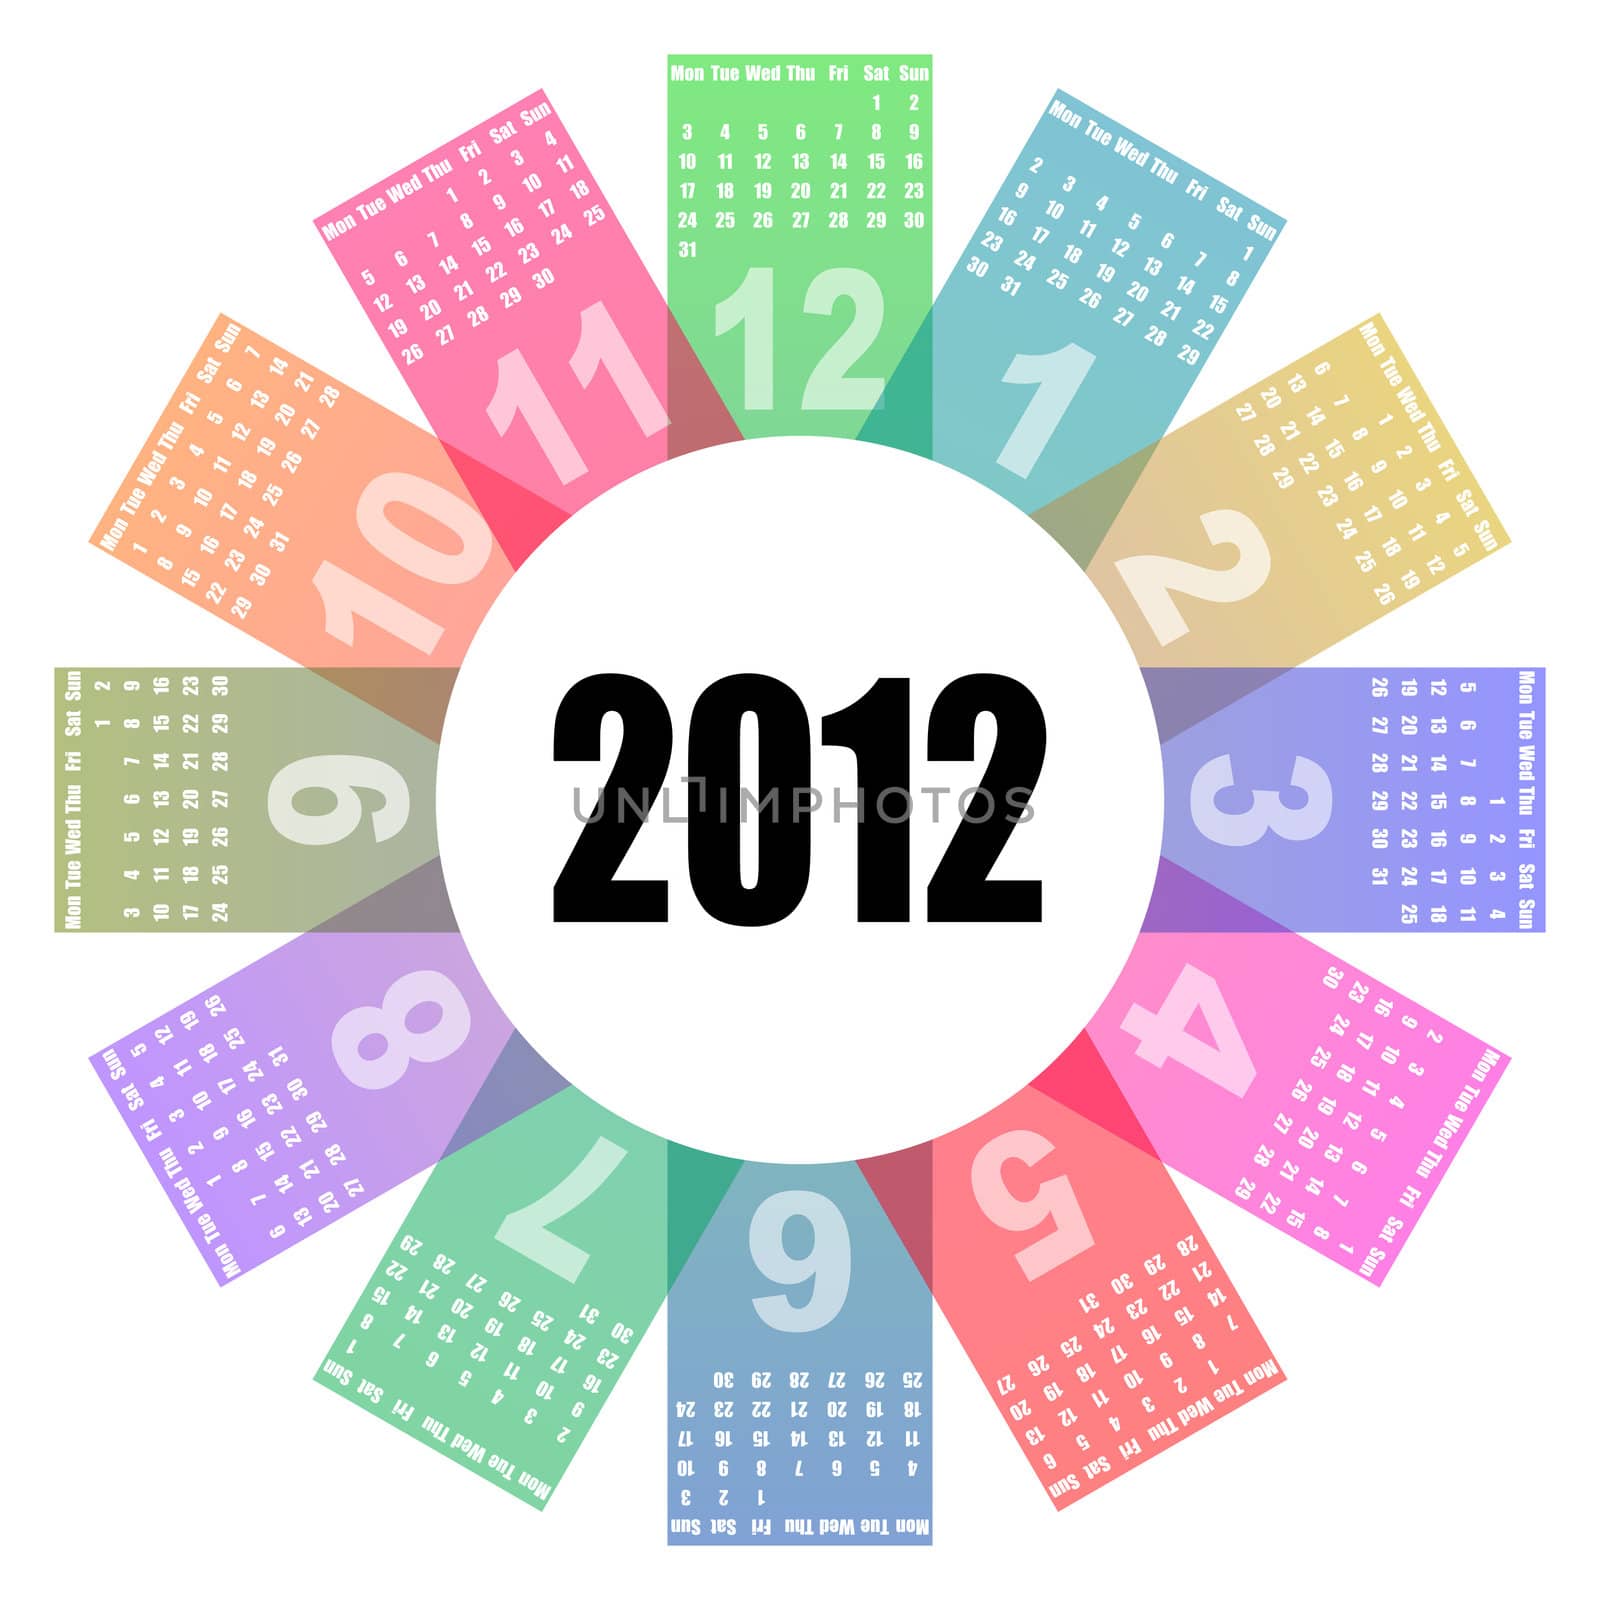 2012 colorful calendar